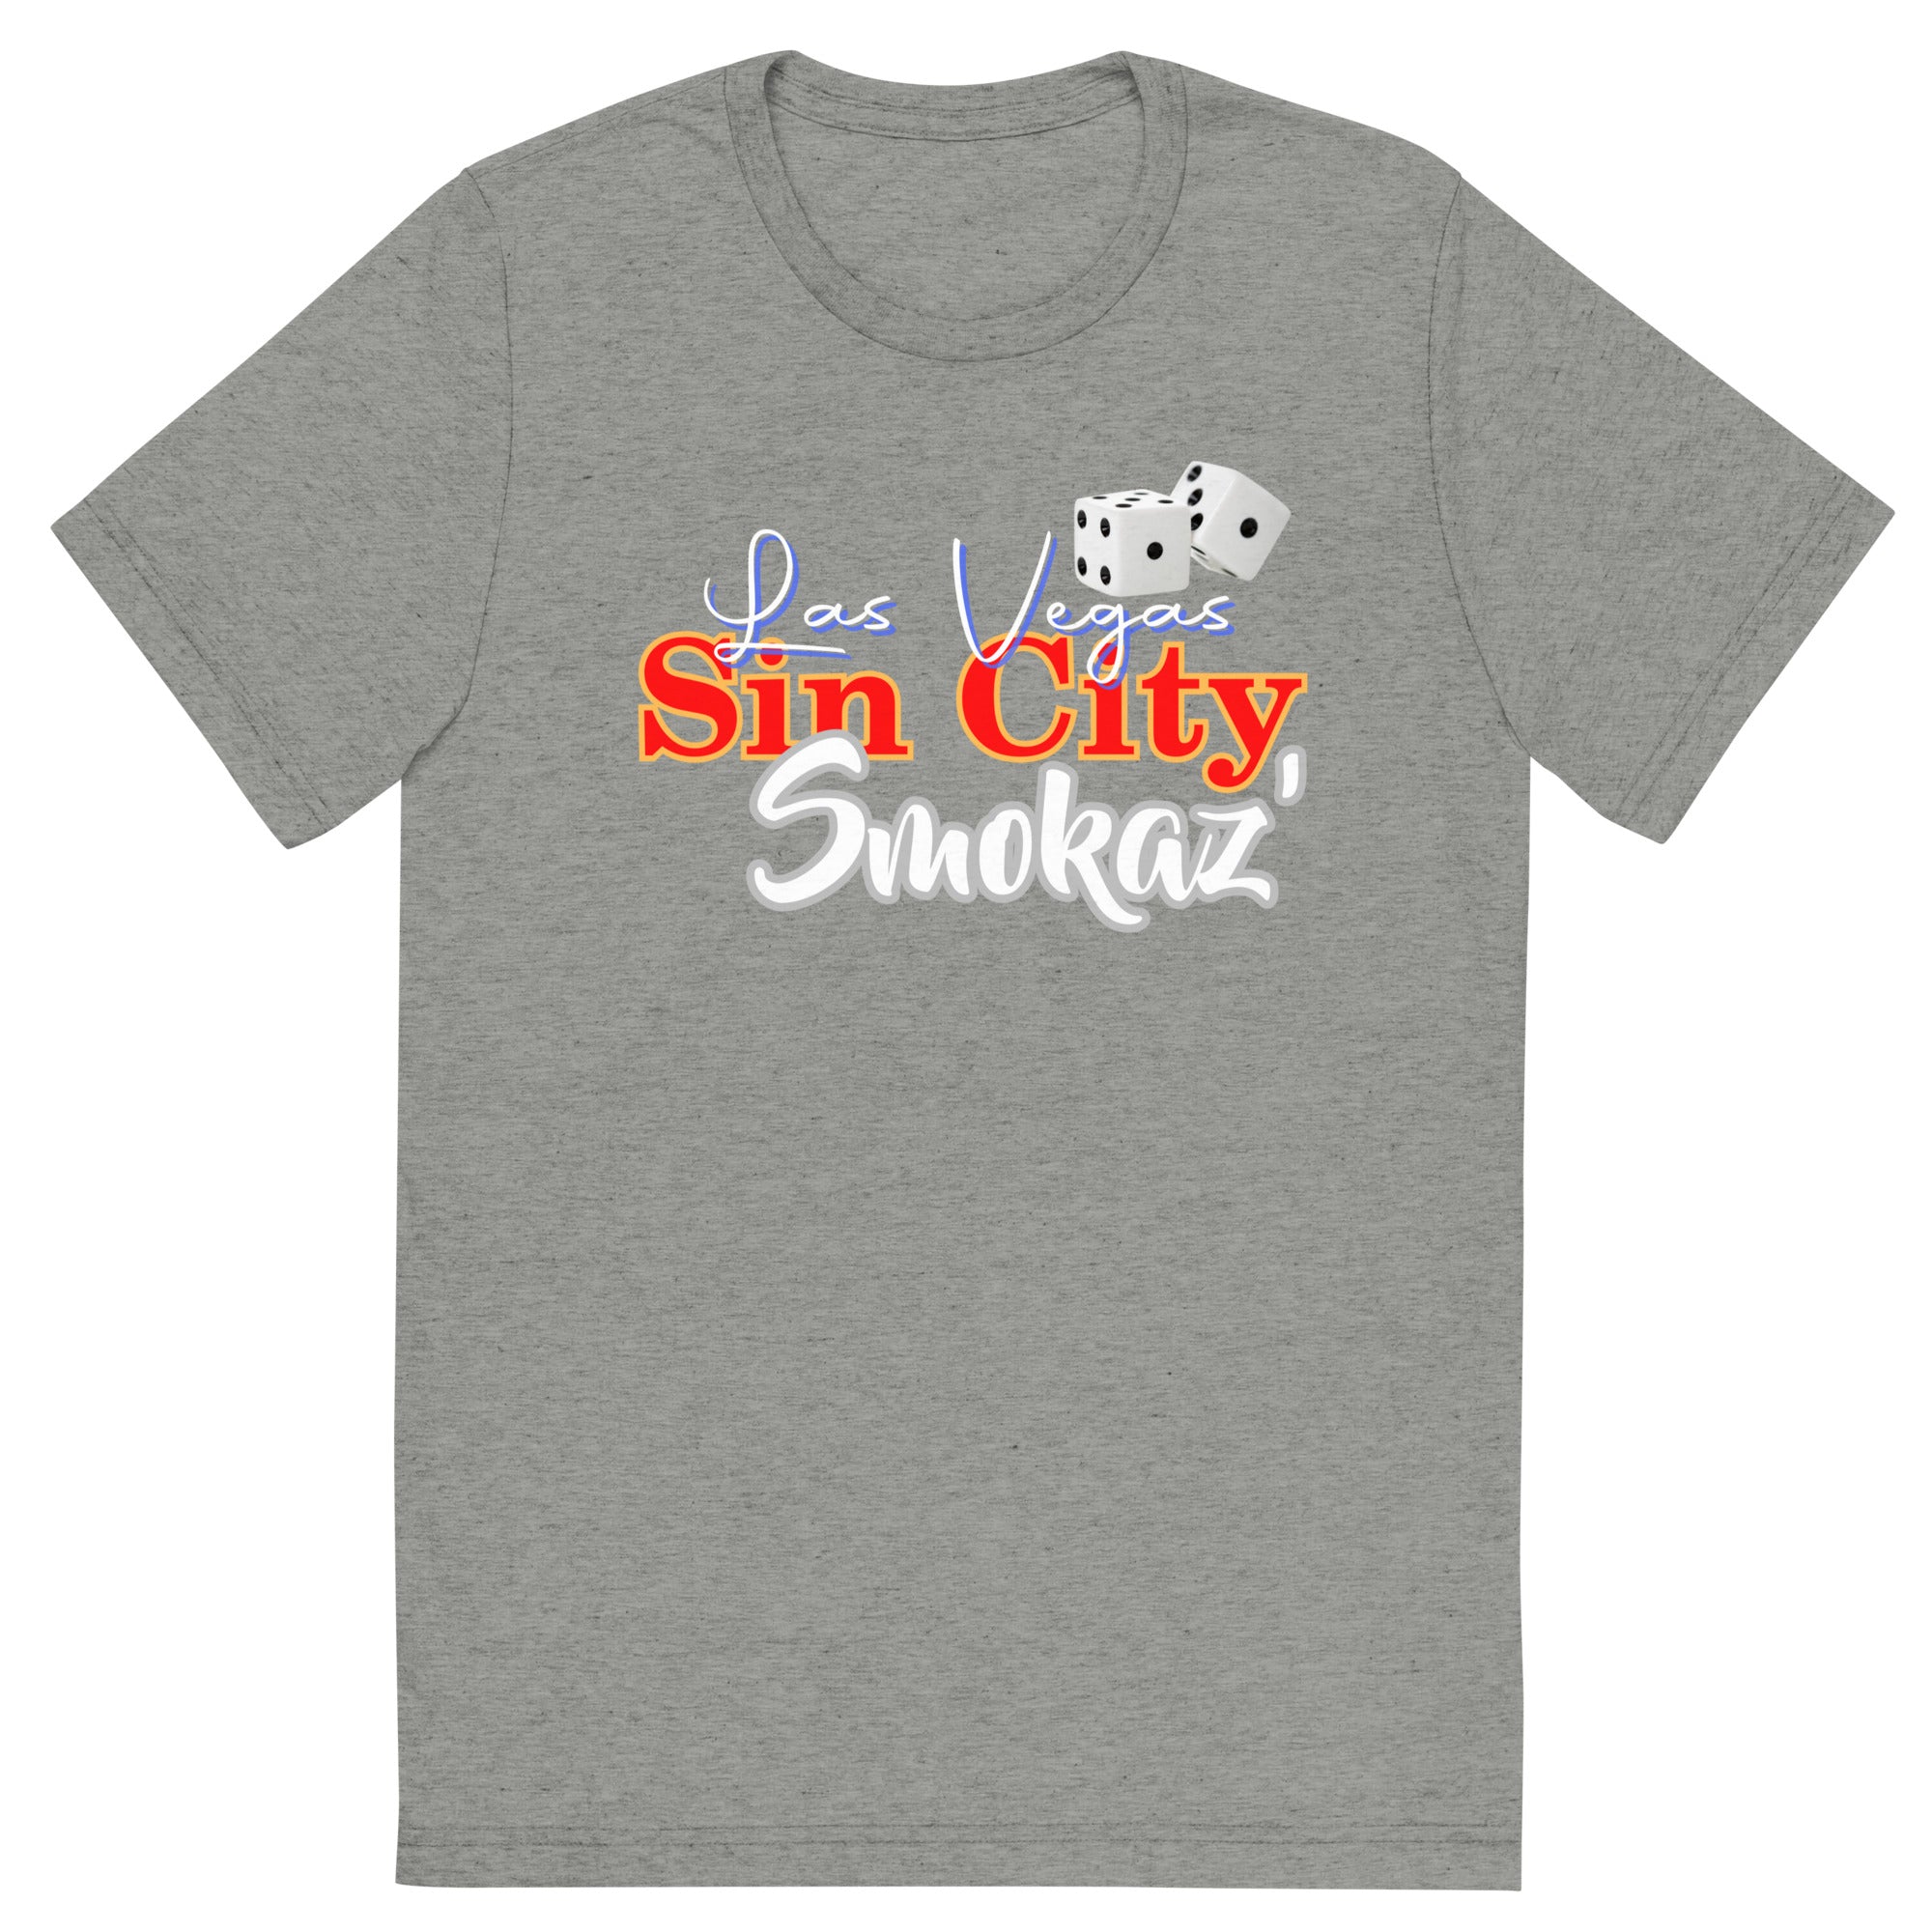 Sin City Smokaz- Short sleeve t-shirt